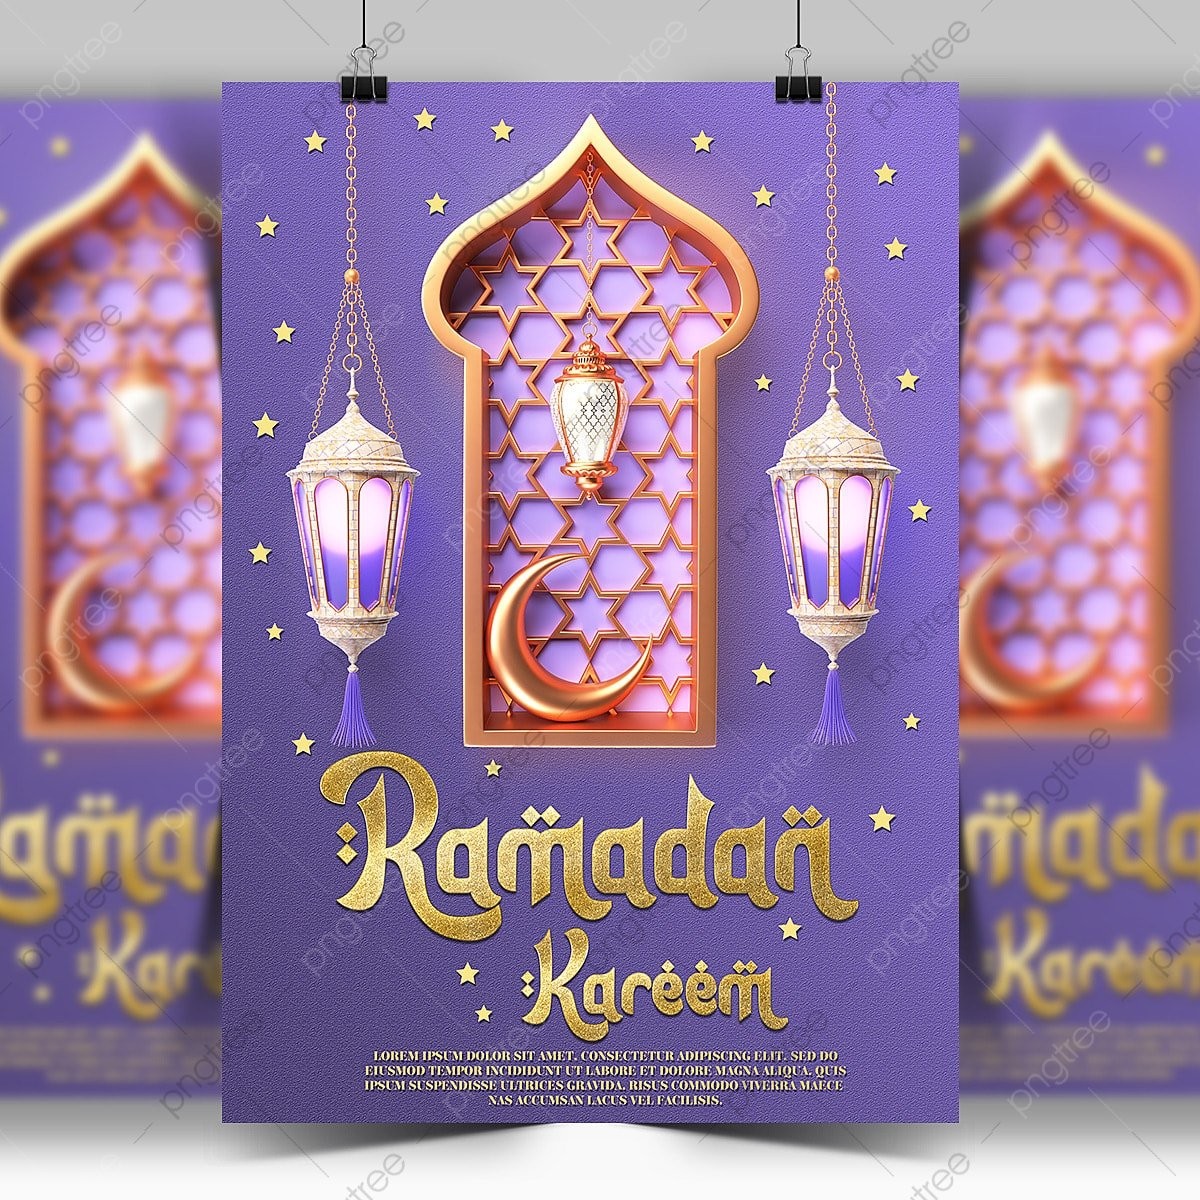 pngtree-ramadan-kareem-with-golden-luxury-lantern-islamic-ornate-greeting-card-template-png-image_7509326.png